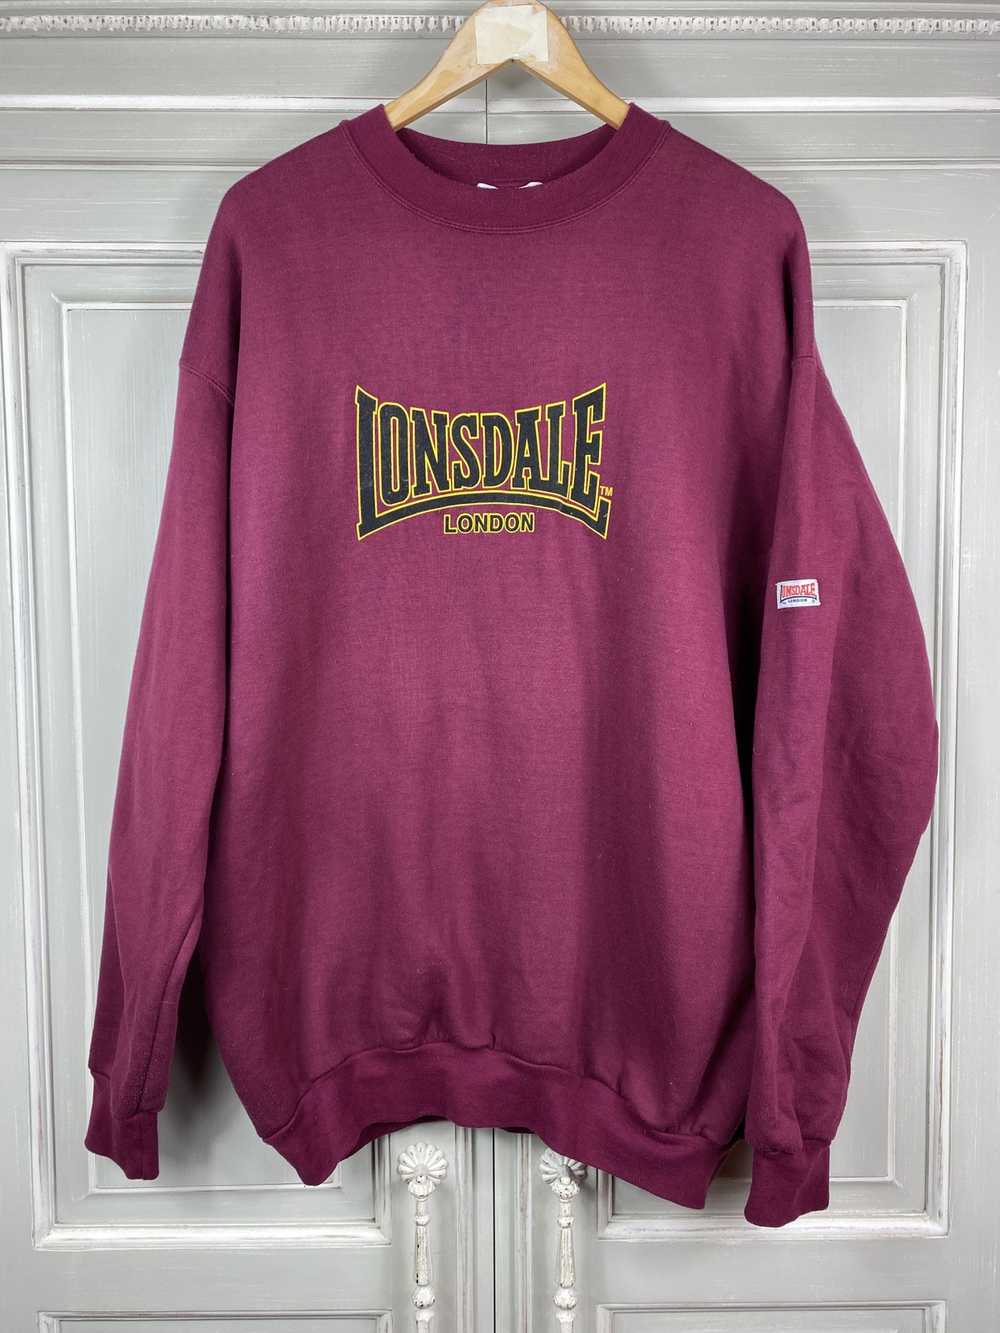 Lonsdale London Sweatshirts & Hoodies for Sale